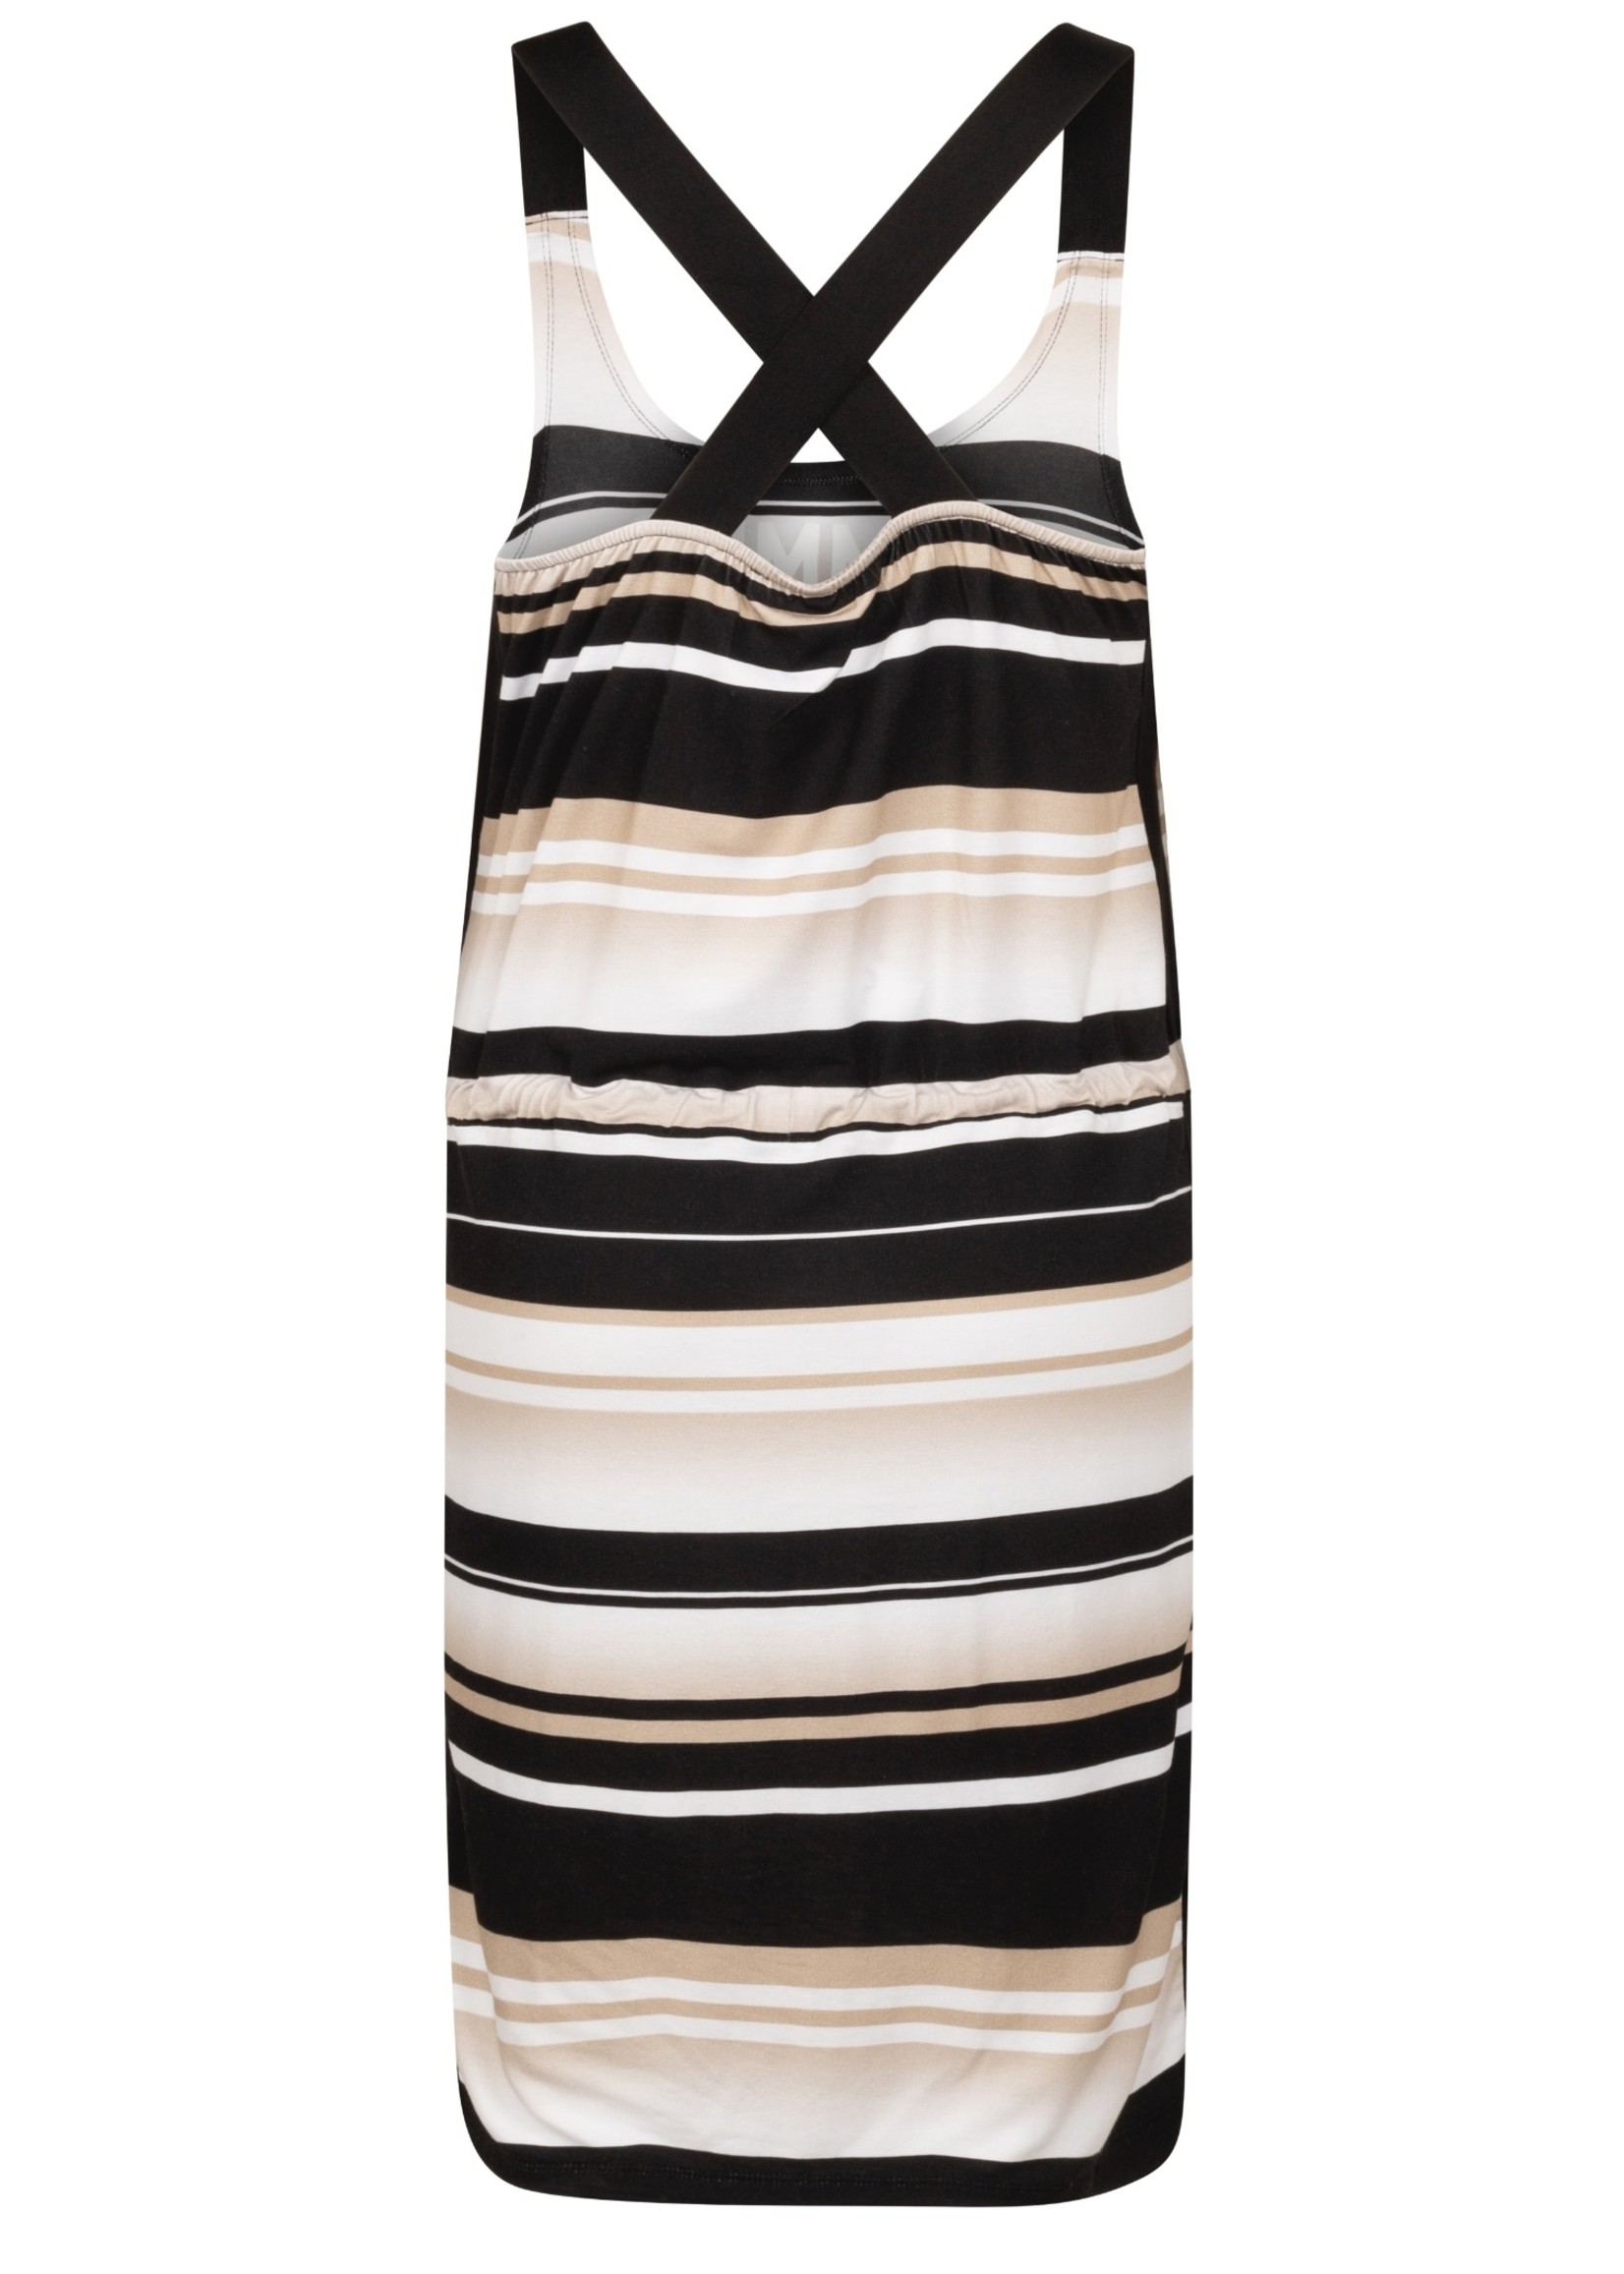 Zoso Jill - Striped dress - Black/Sand